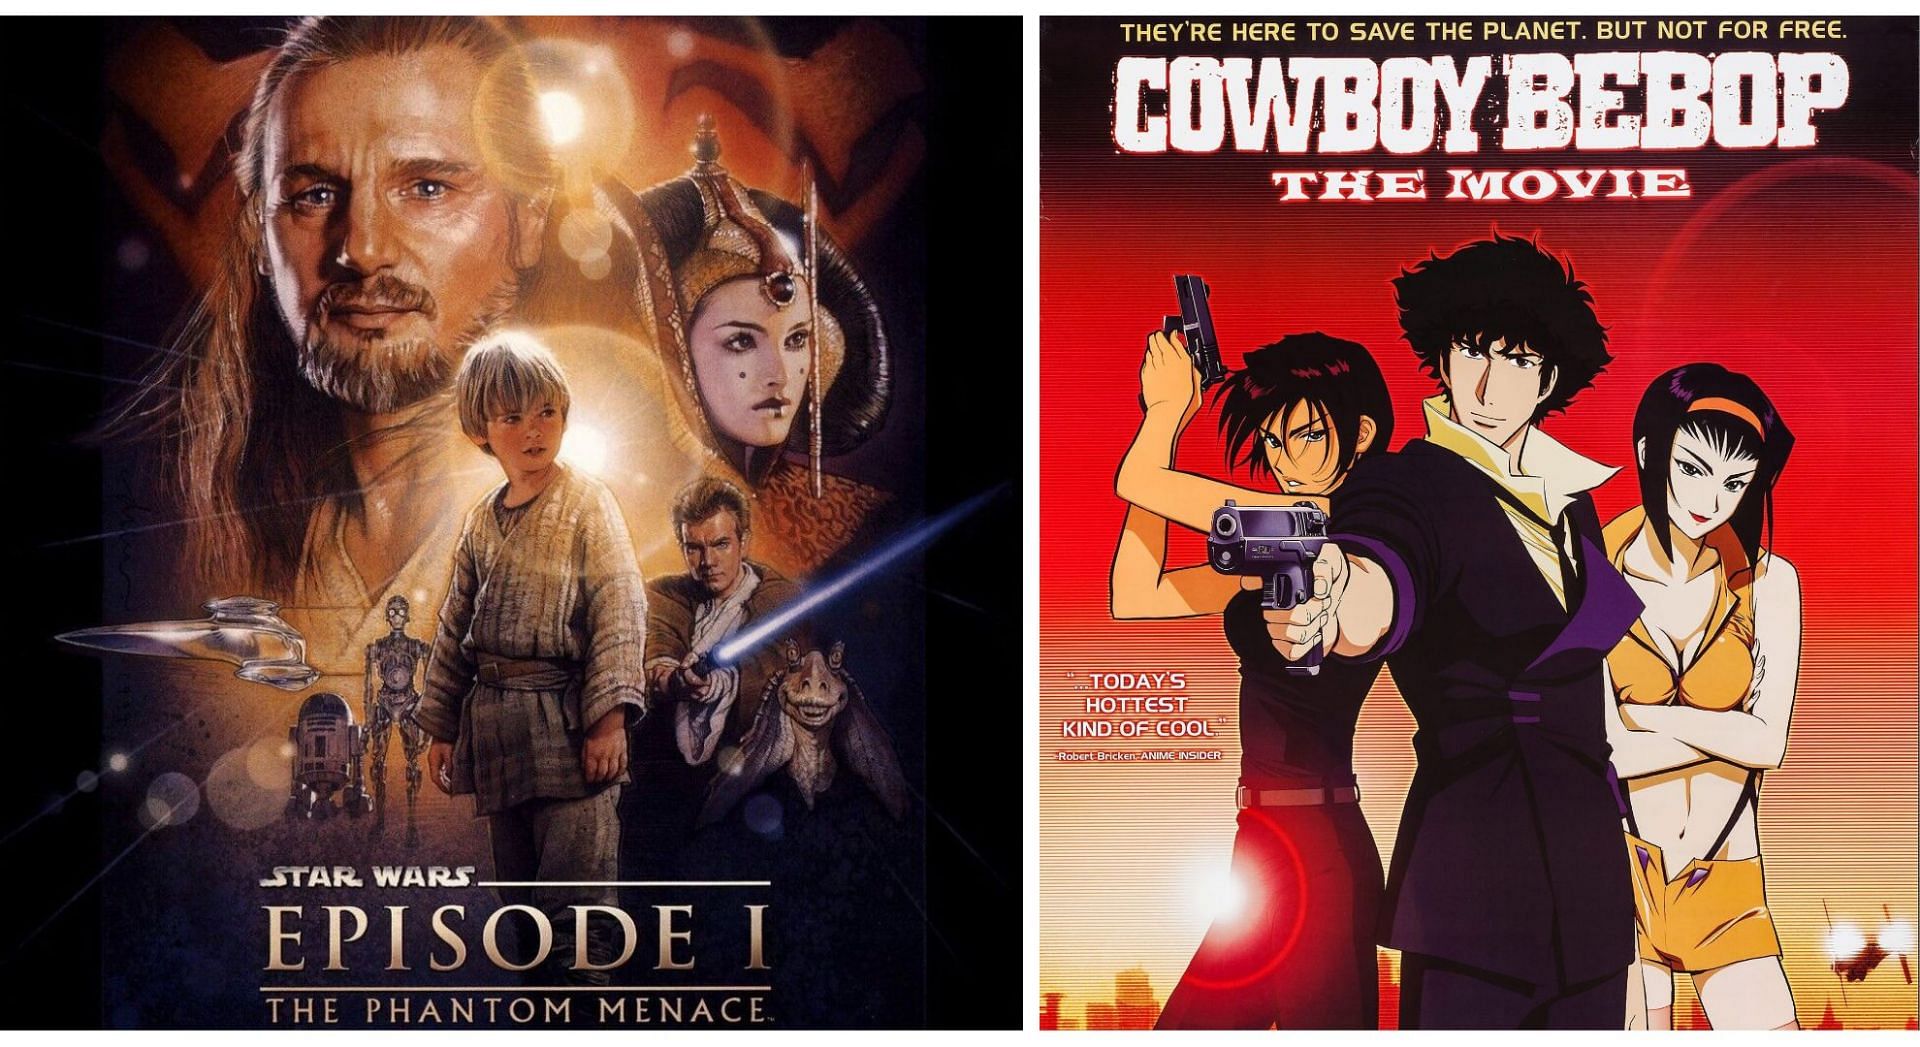 Star Wars episode 1 and Cowboy Bebop posters (Image via Sportskeeda)